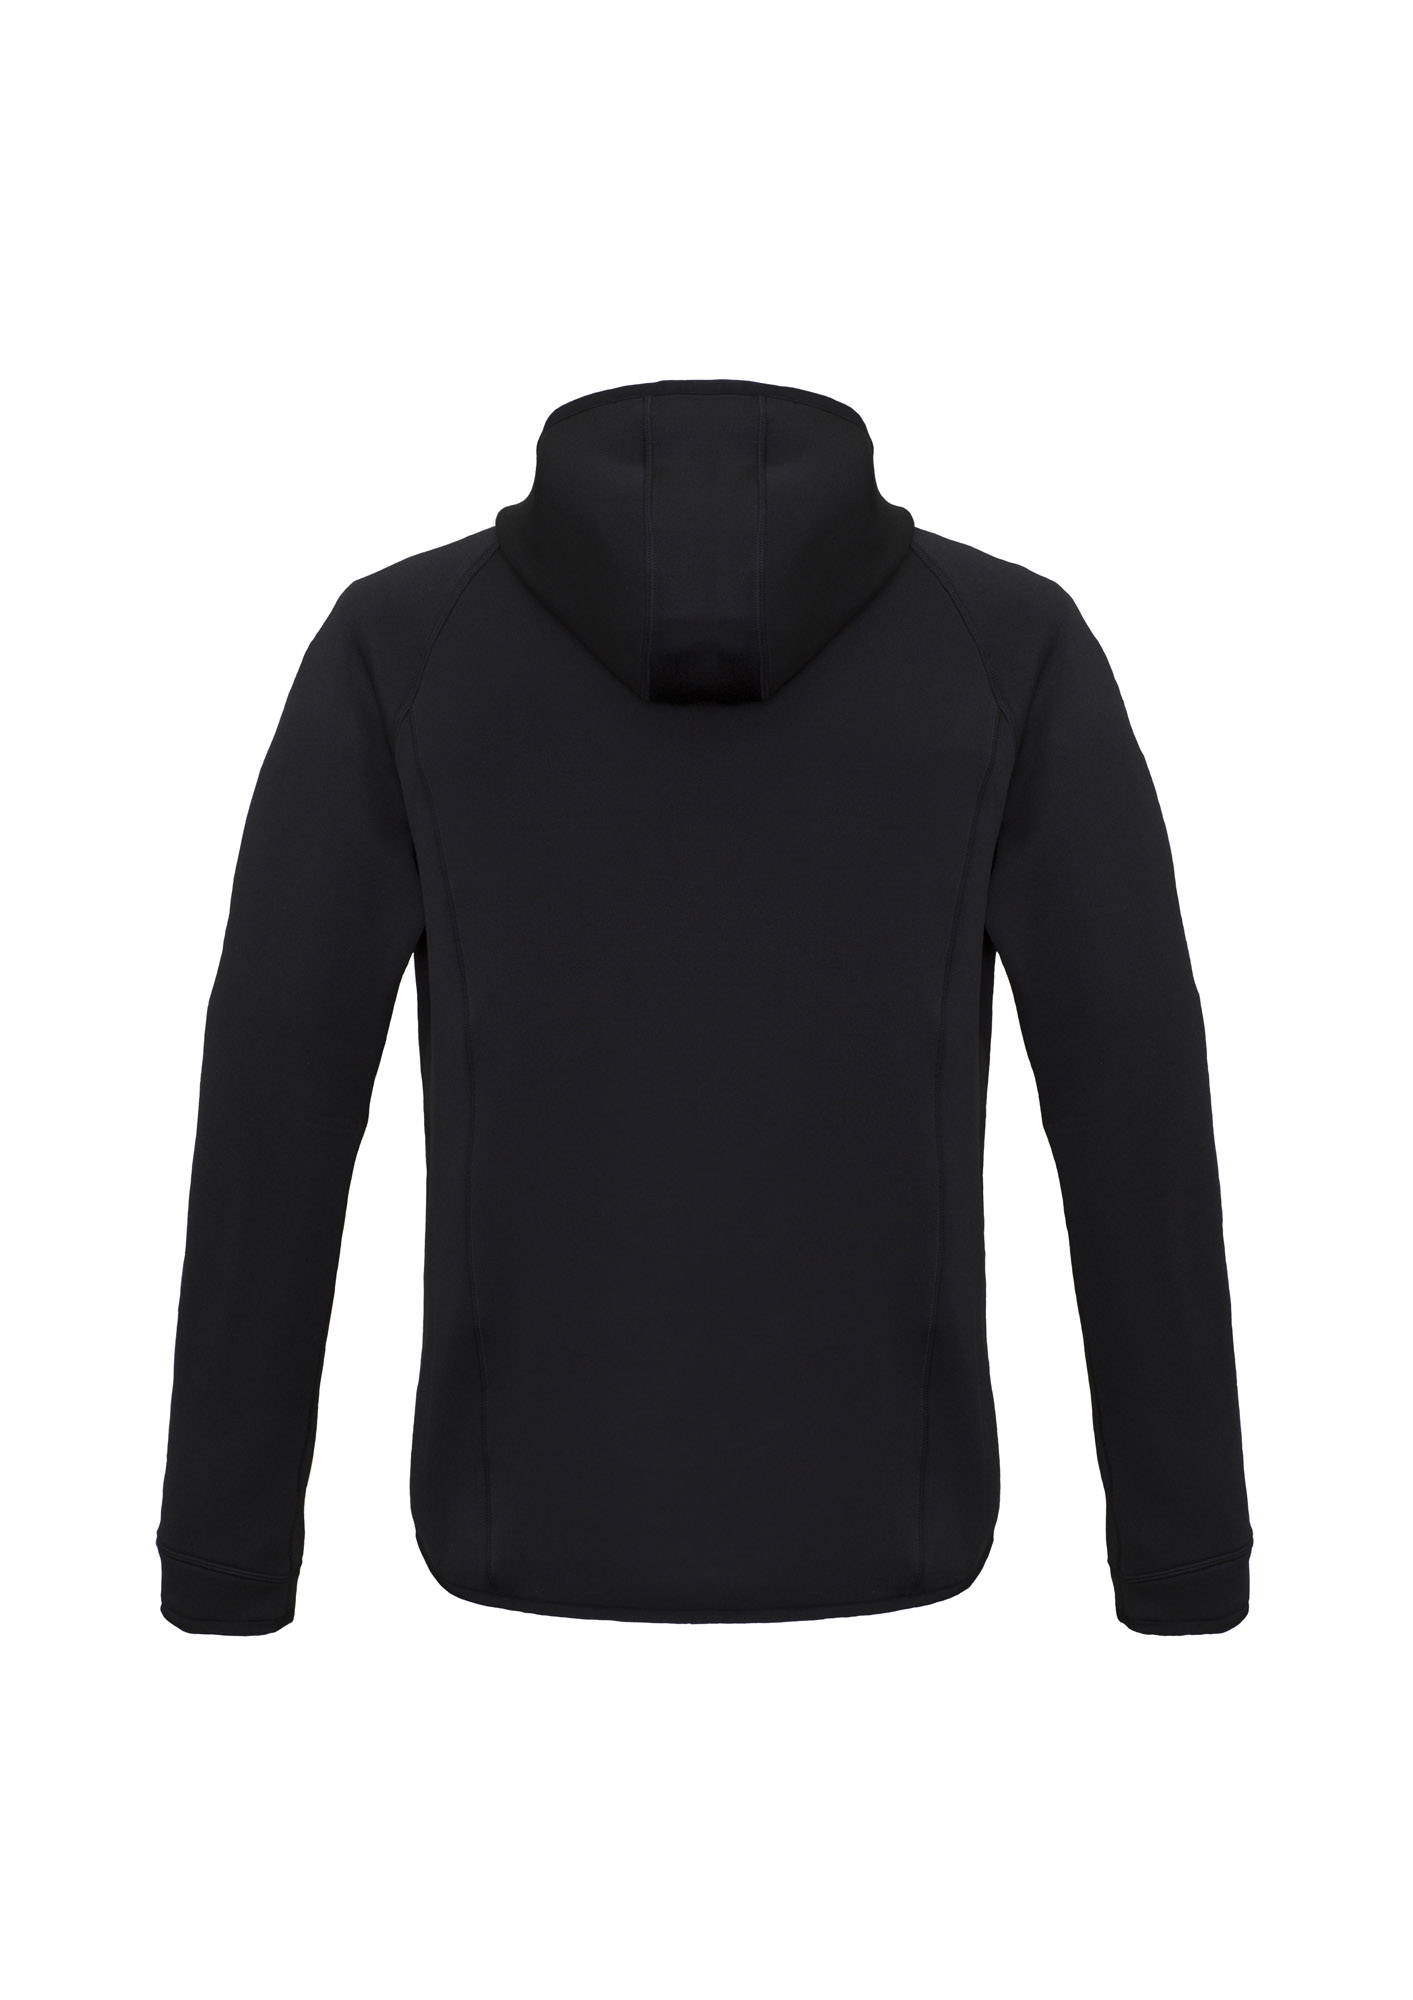 Men's Stealth Jacket - Black and Cyan - Uniform Edit